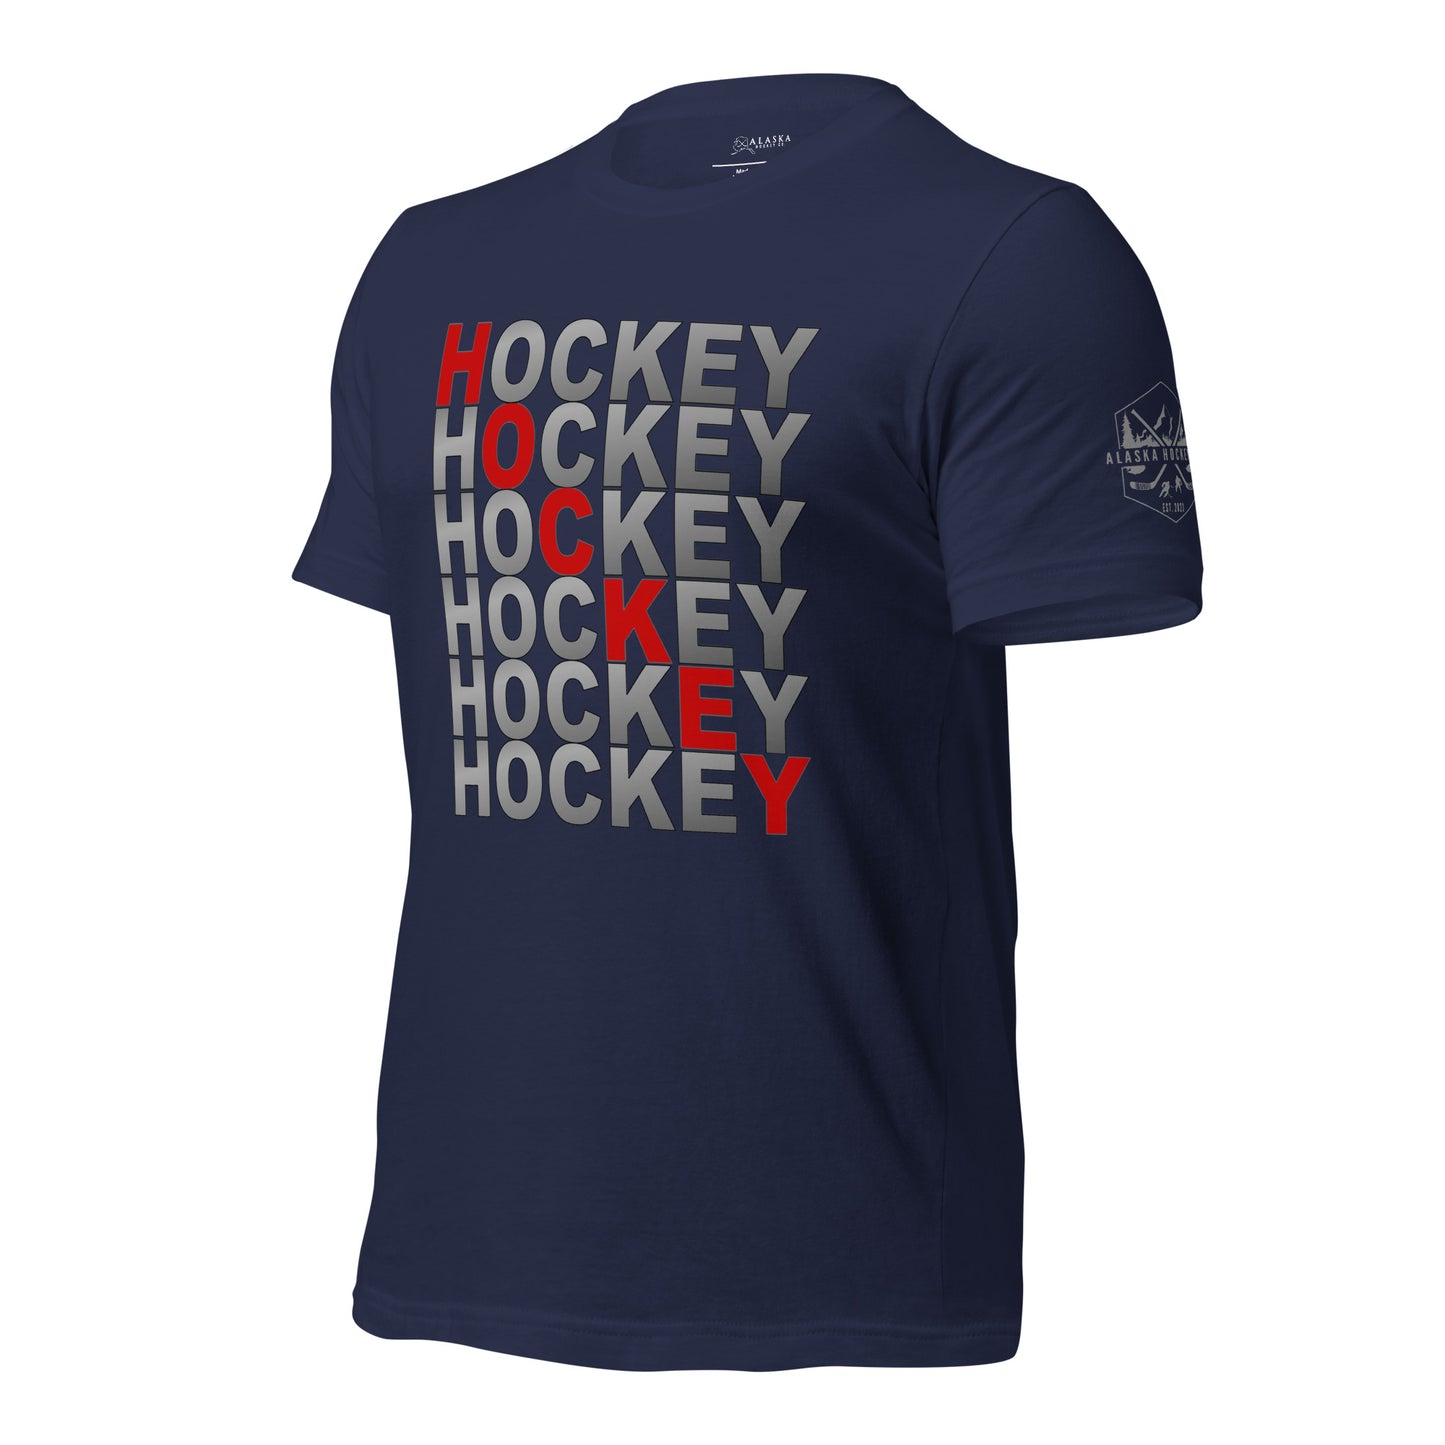 Hockey Hockey Hockey T-shirt